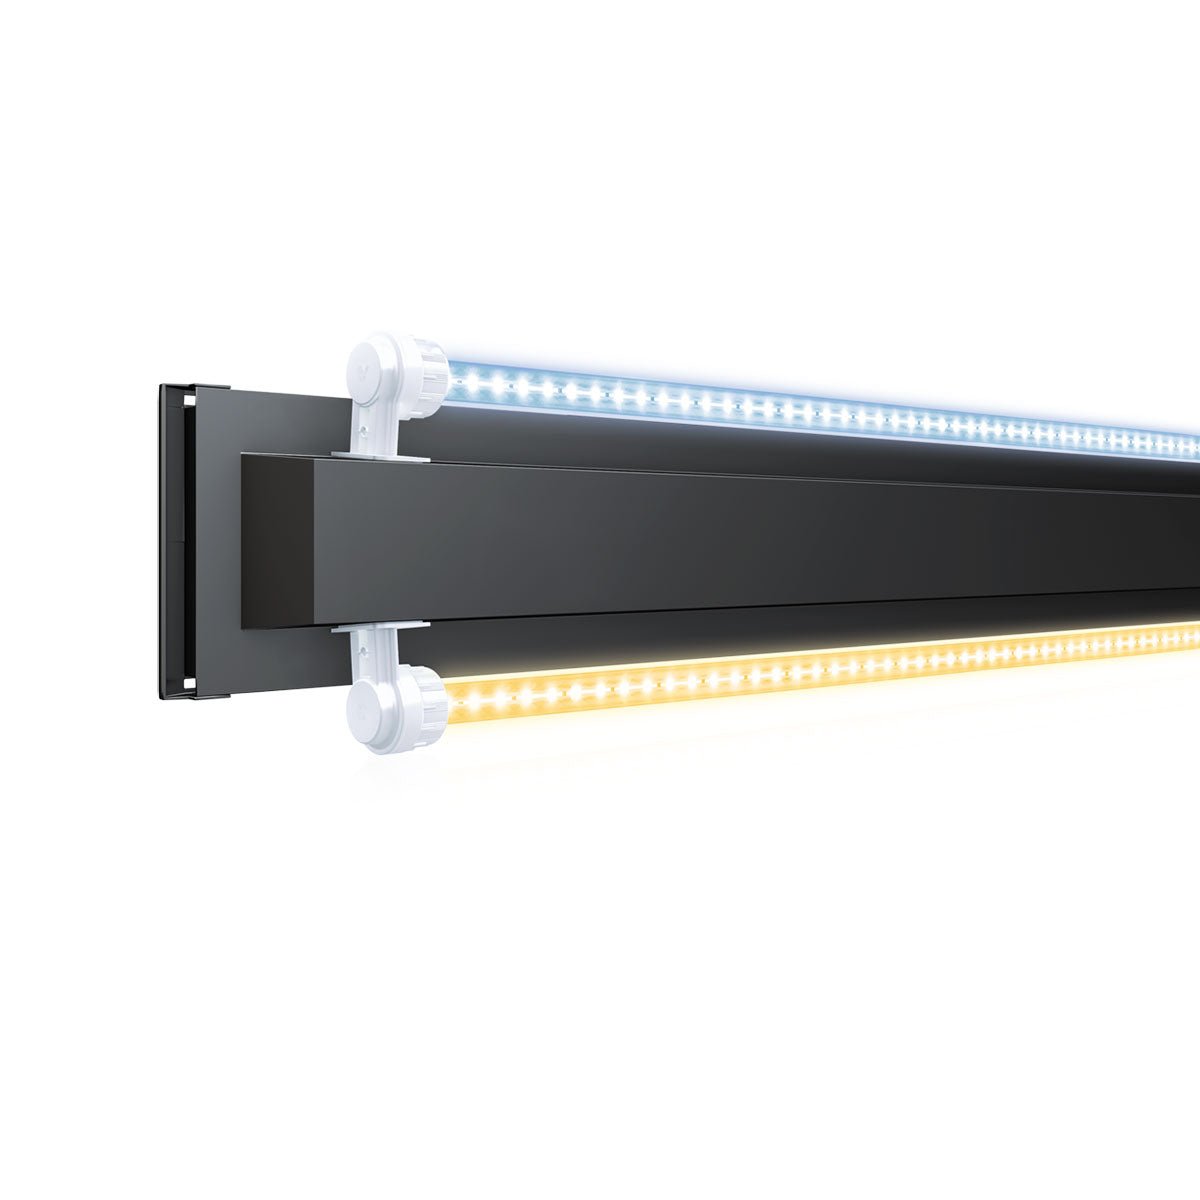 Juwel MultiLux LED Unit - 92cm - Charterhouse Aquatics